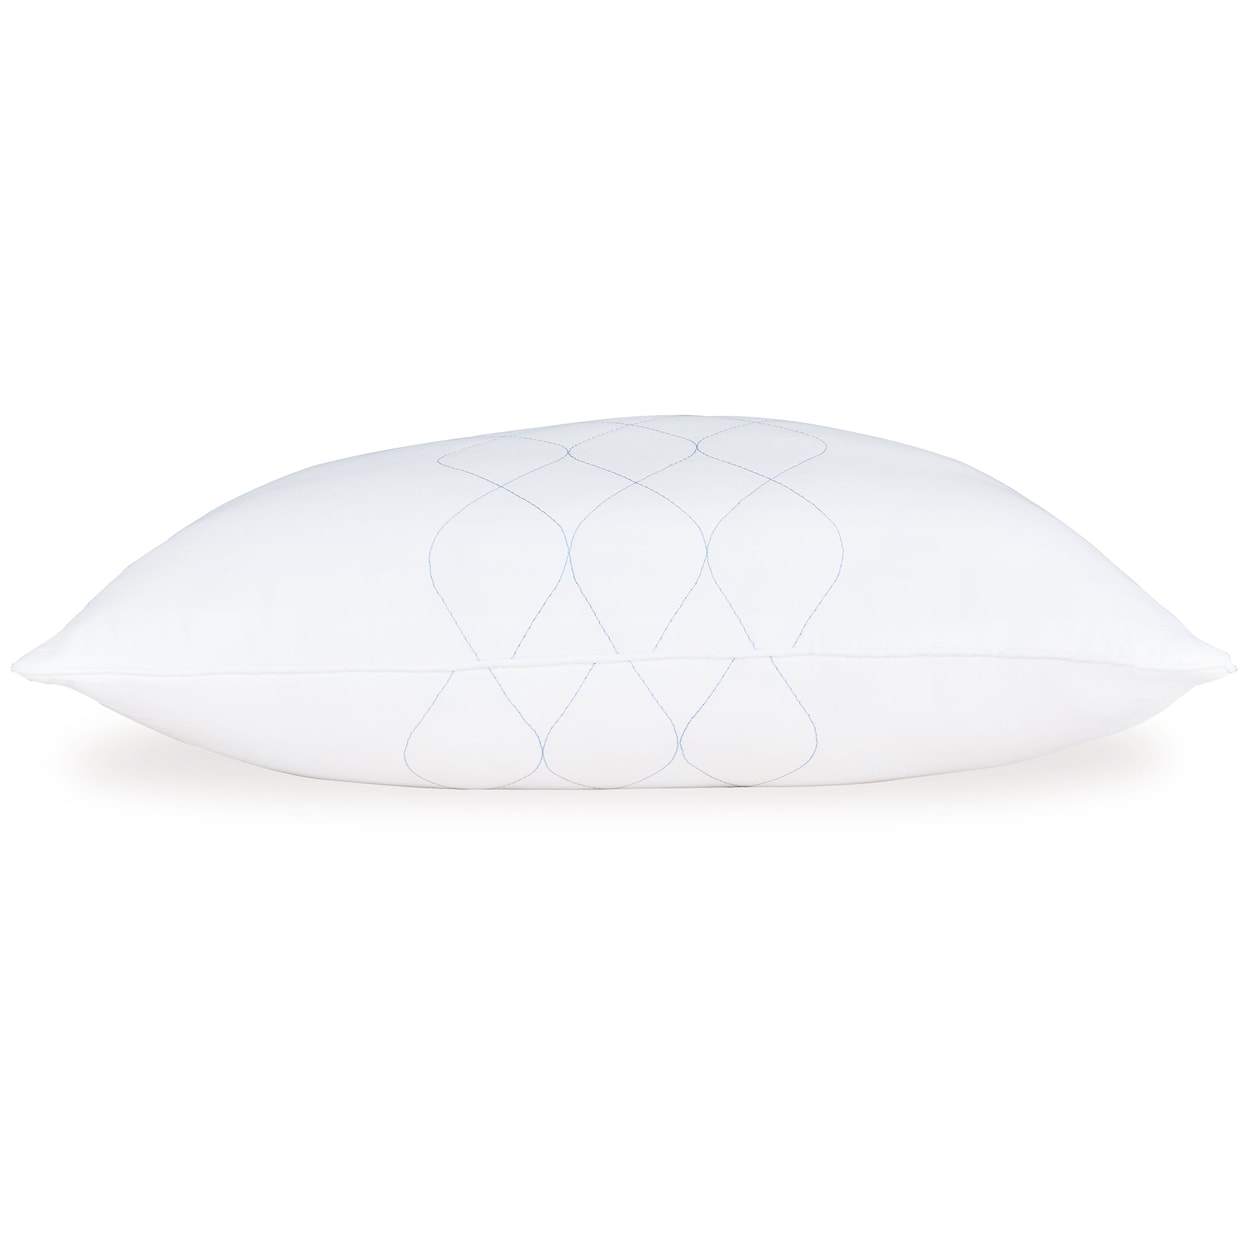 Sierra Sleep Zephyr 2.0 Huggable Comfort Pillow